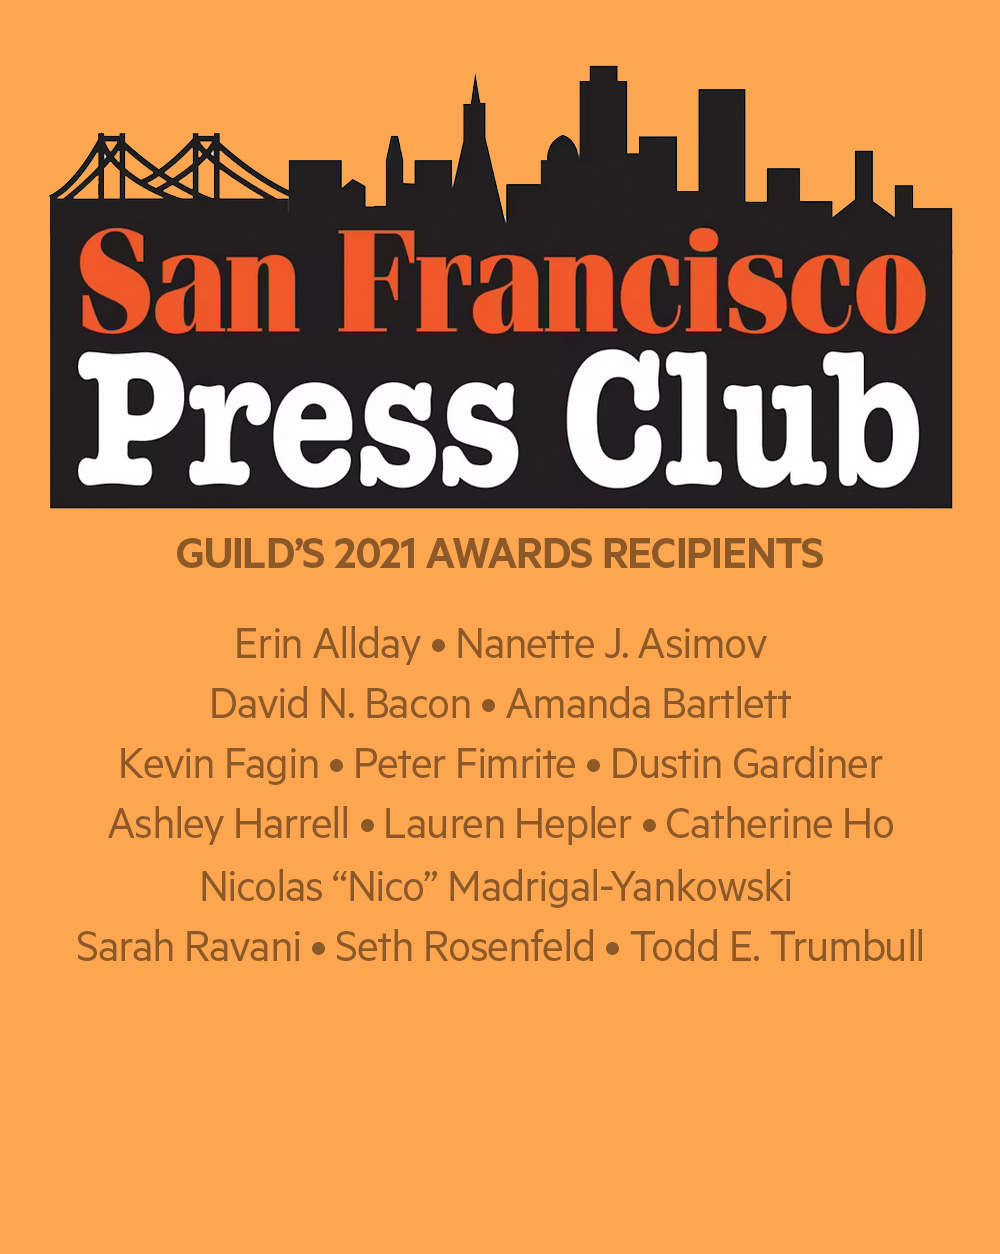 Guild members receive San Francisco Press Club awards